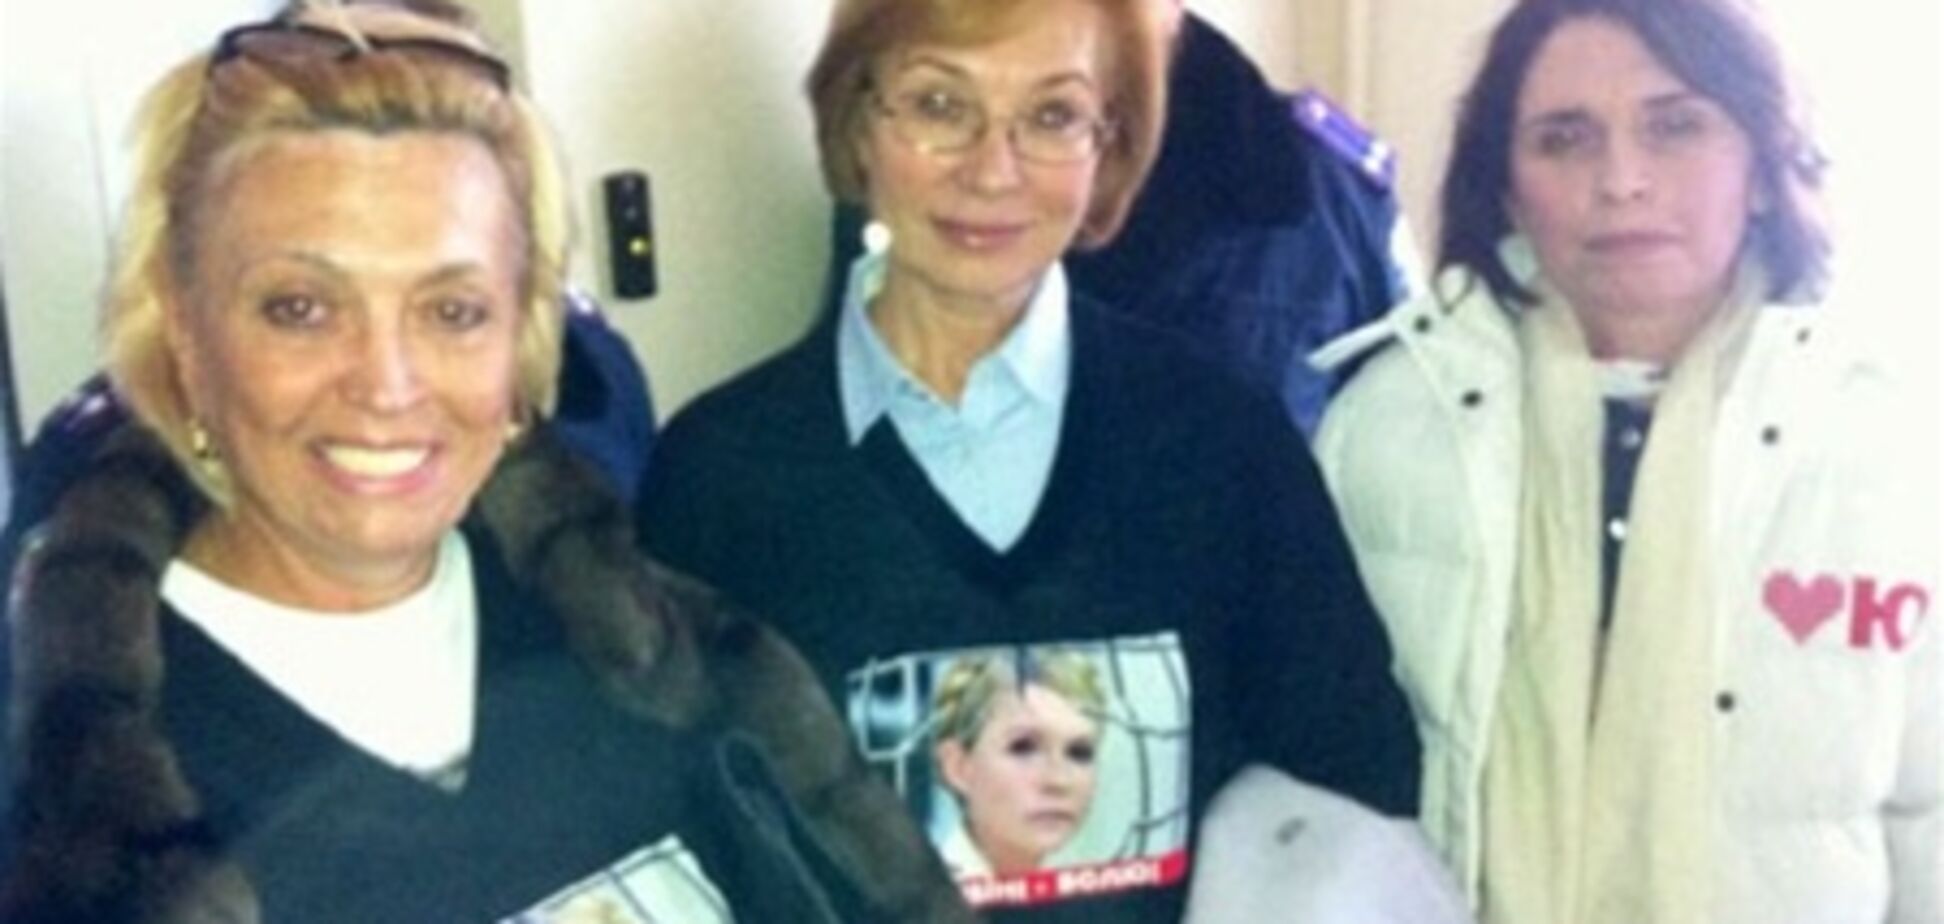 Соратниць Тимошенко винесли 'за руки і ноги' - нардеп